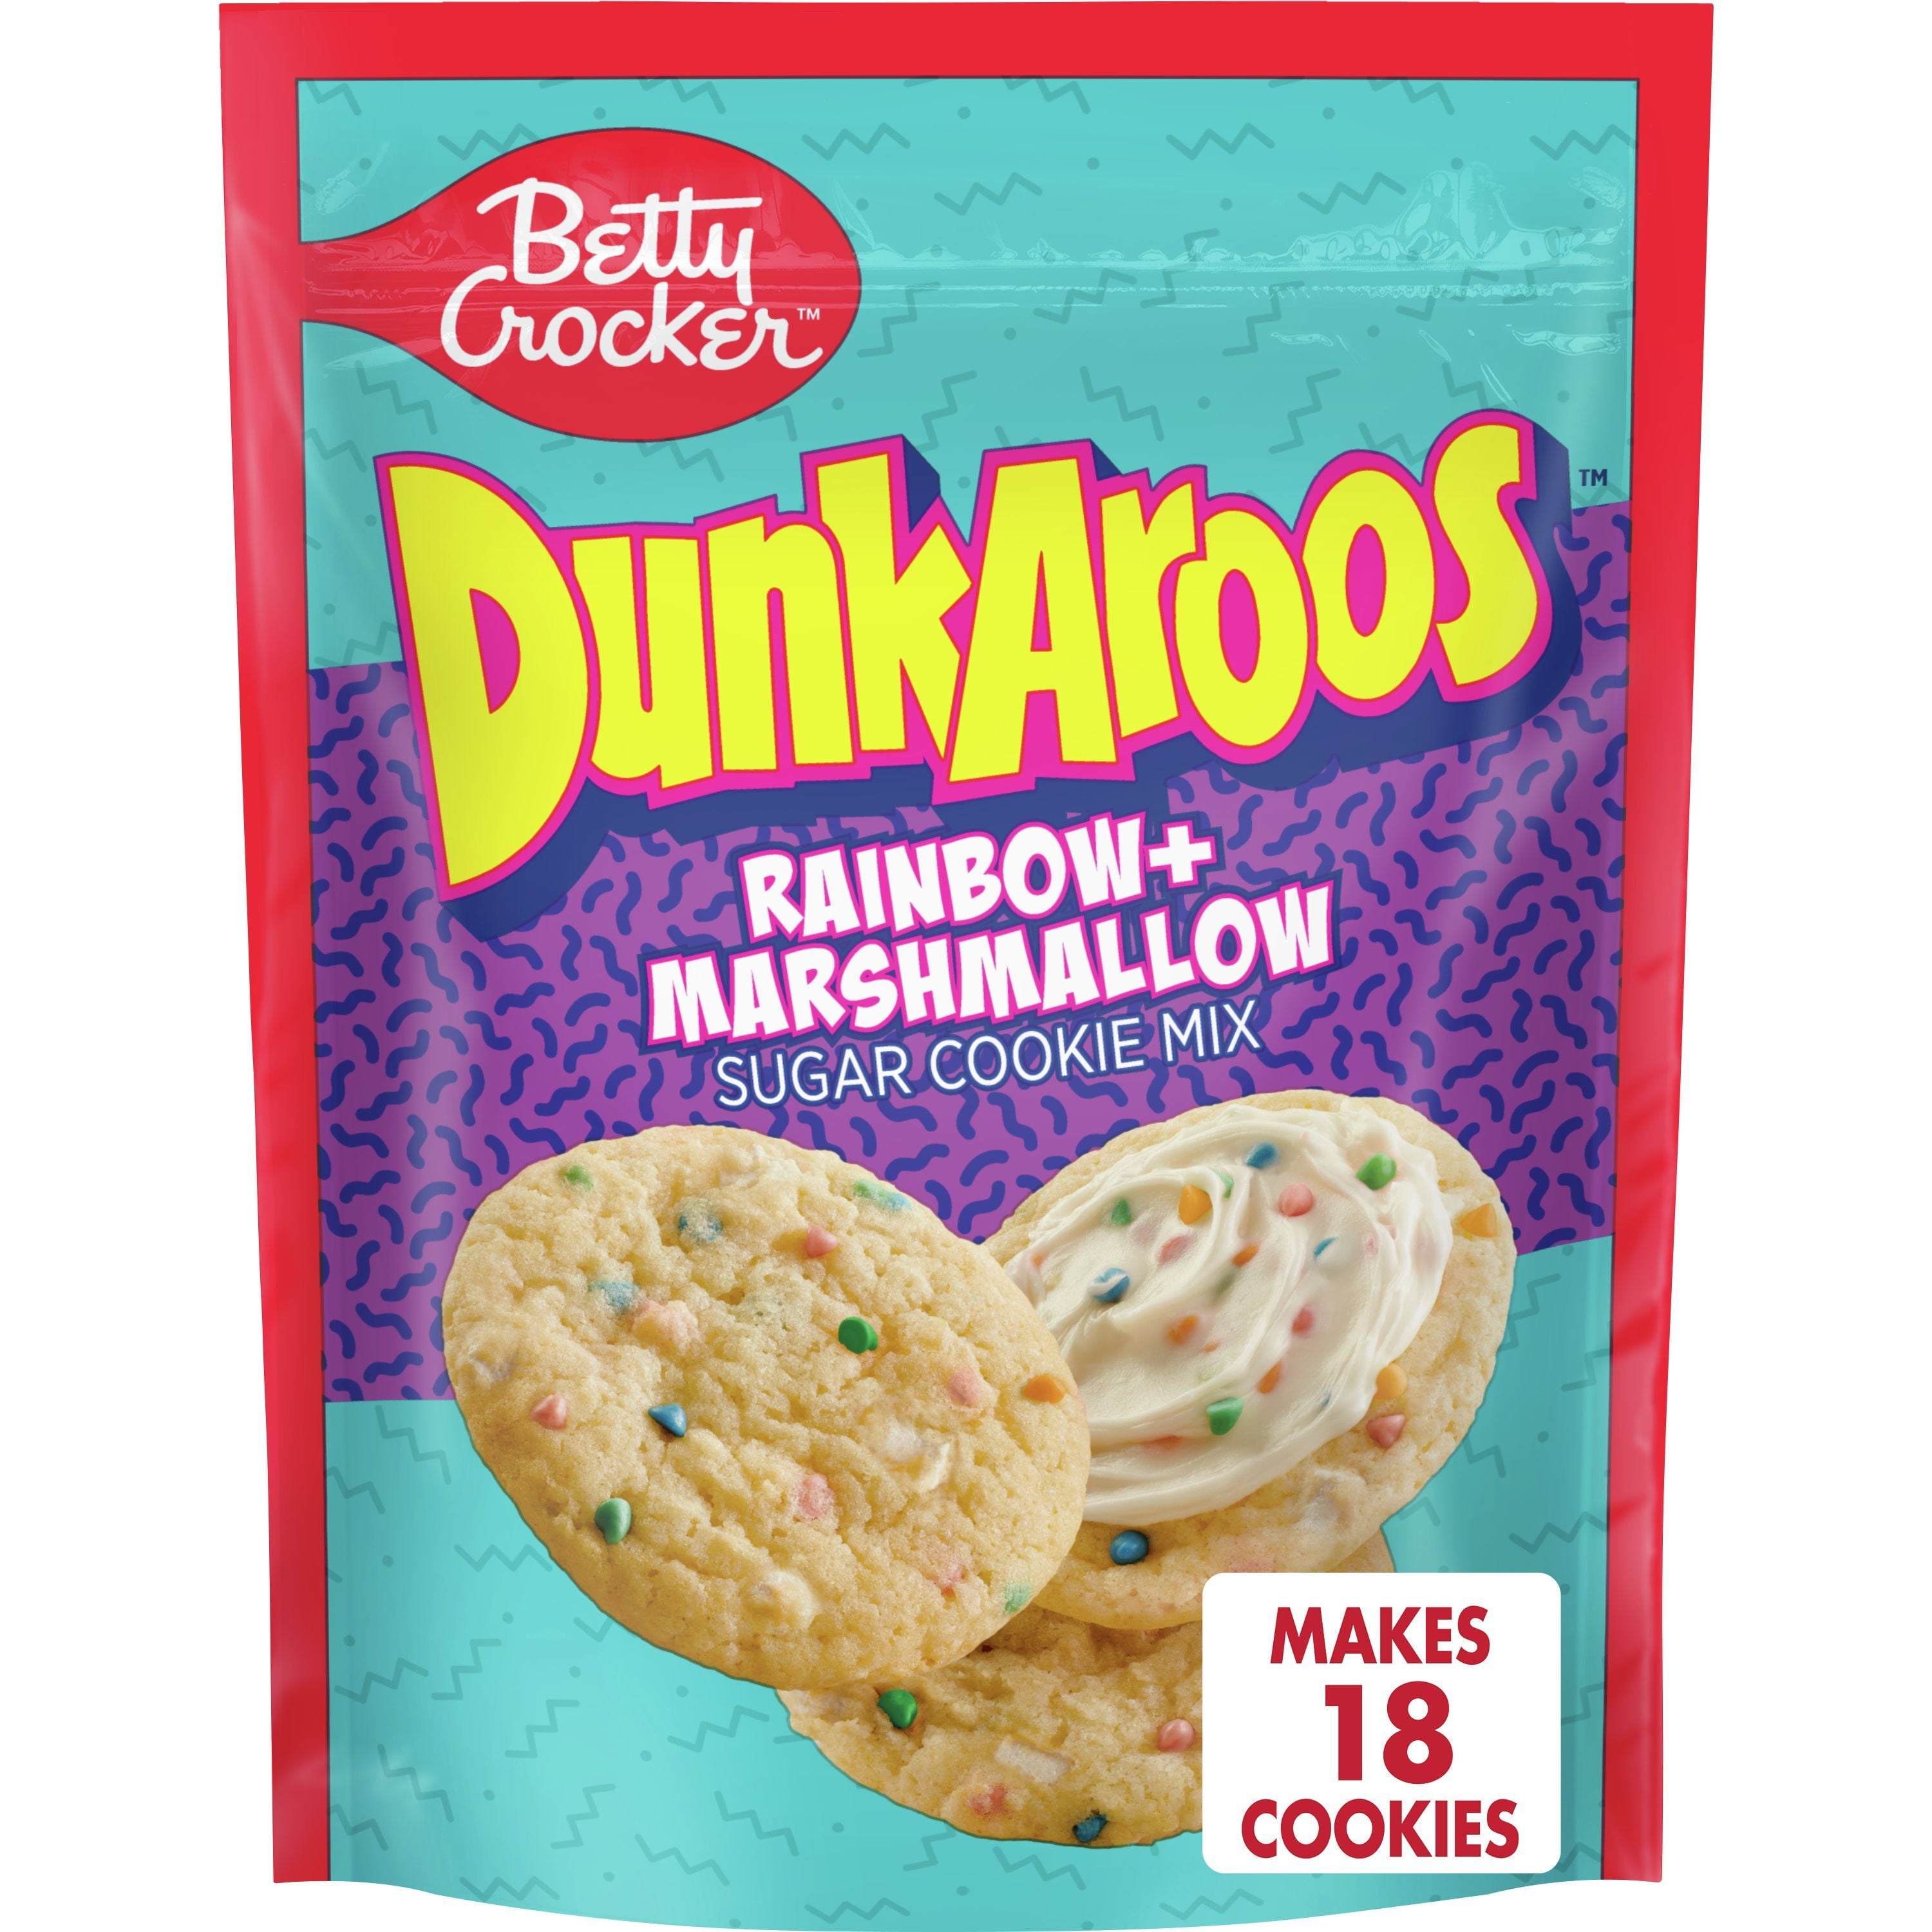 Betty Crocker Dunkaroos Sugar Cookie Mix, Rainbow + Marshmallow, 12.6 oz